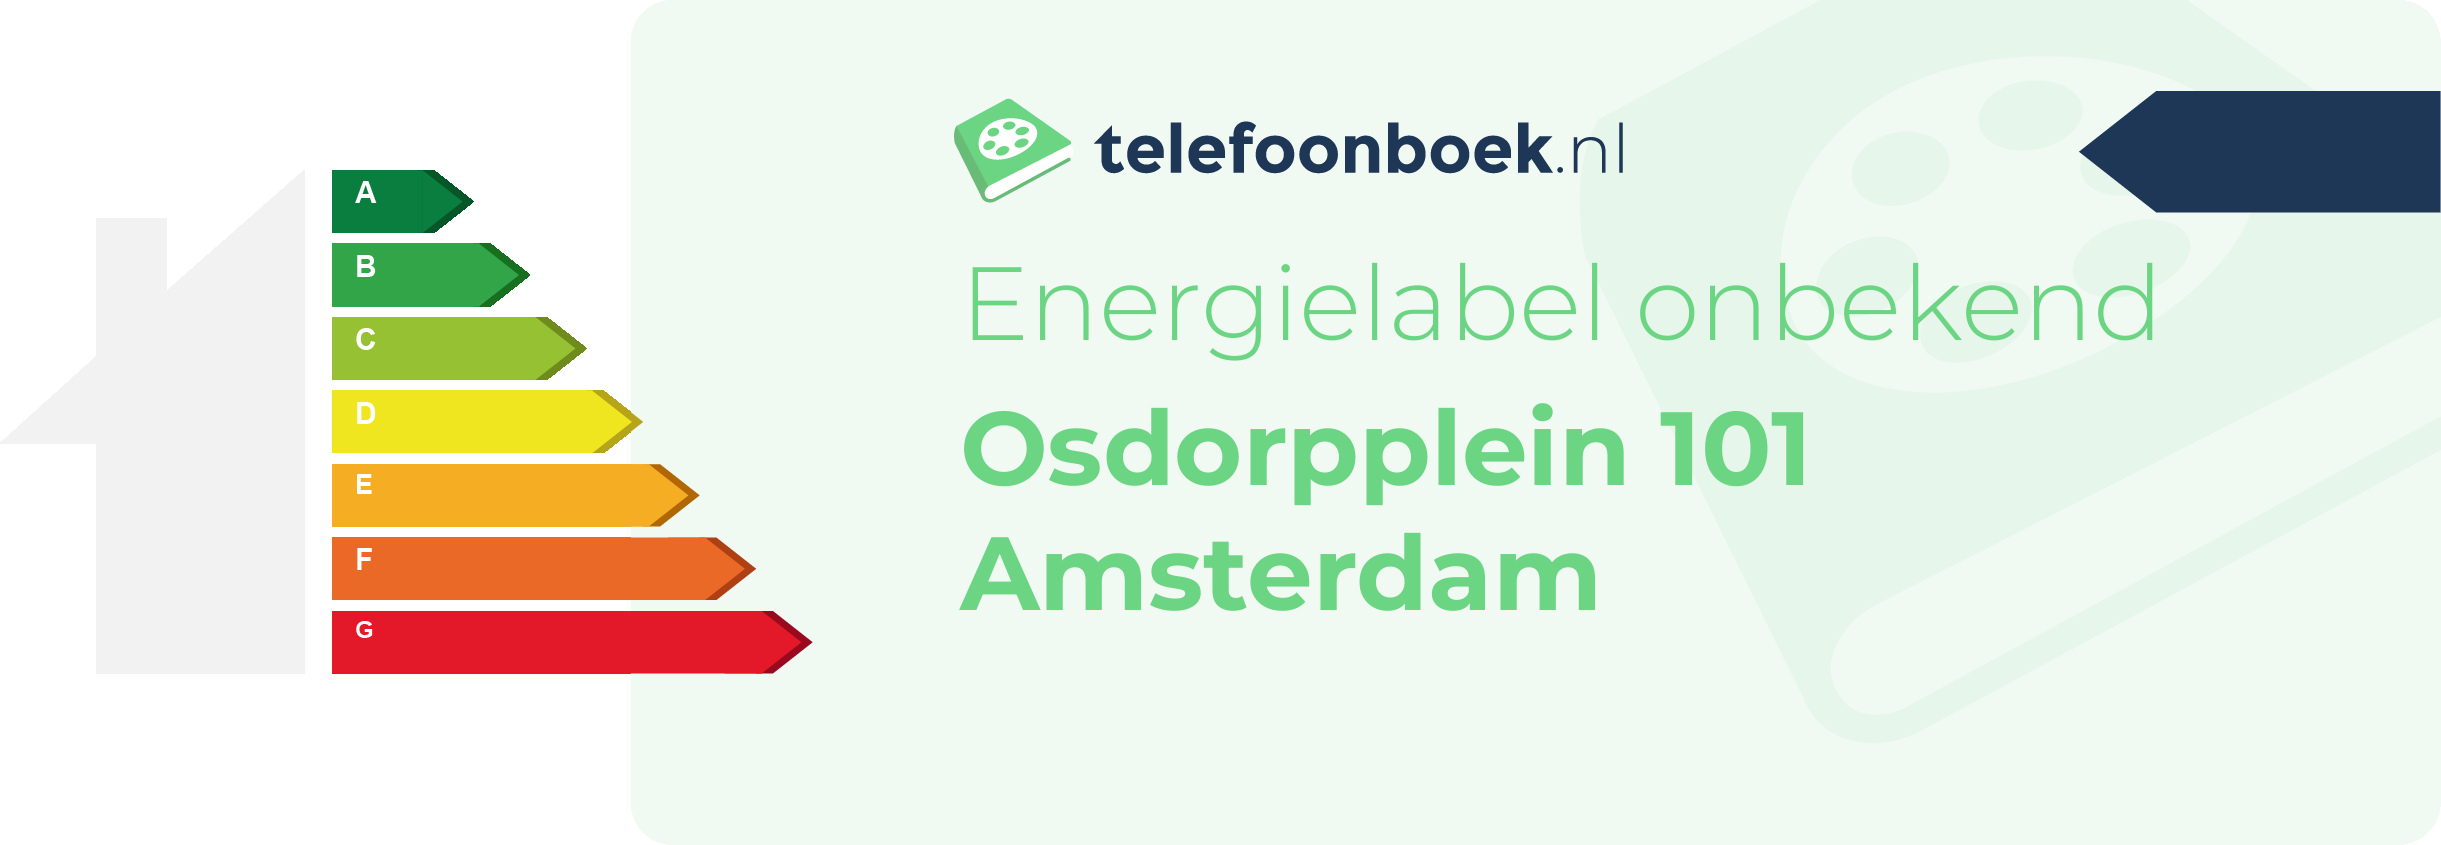 Energielabel Osdorpplein 101 Amsterdam